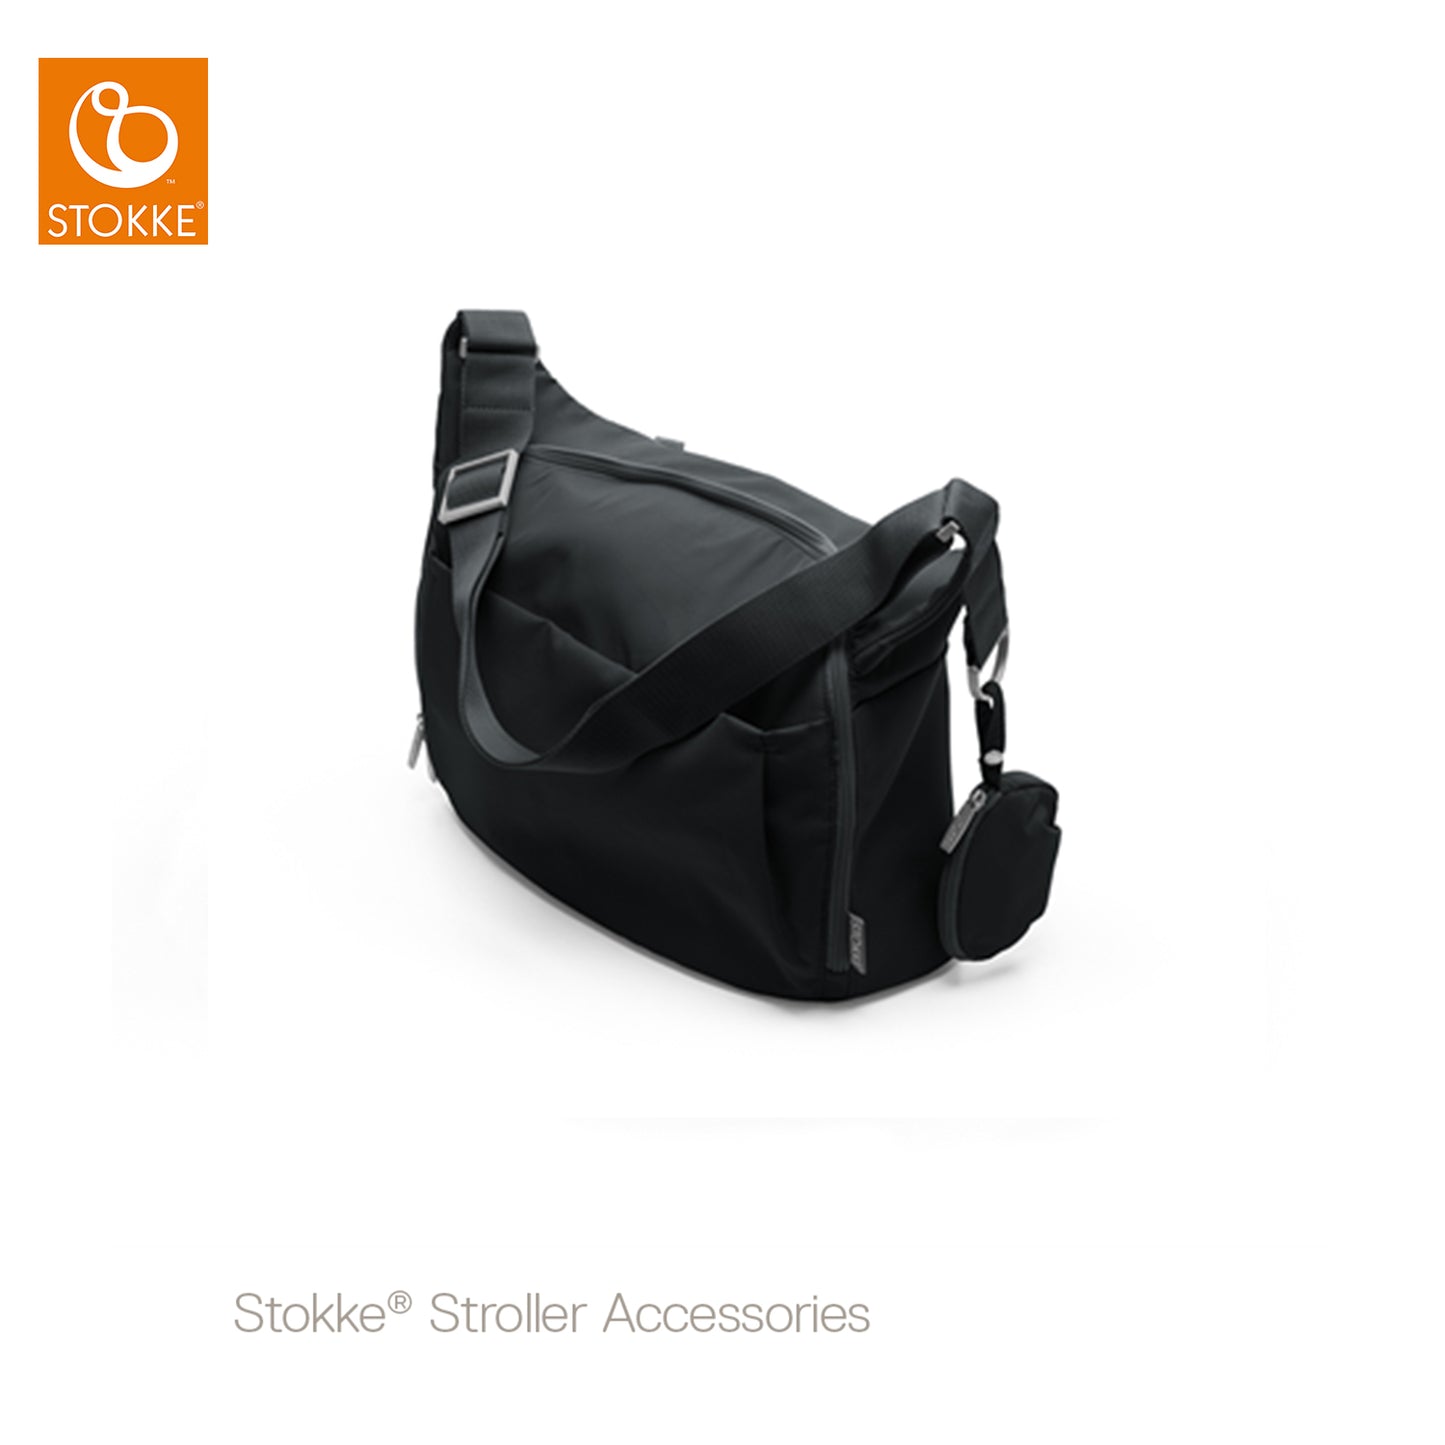 STOKKE - 2 in 1 changing bag